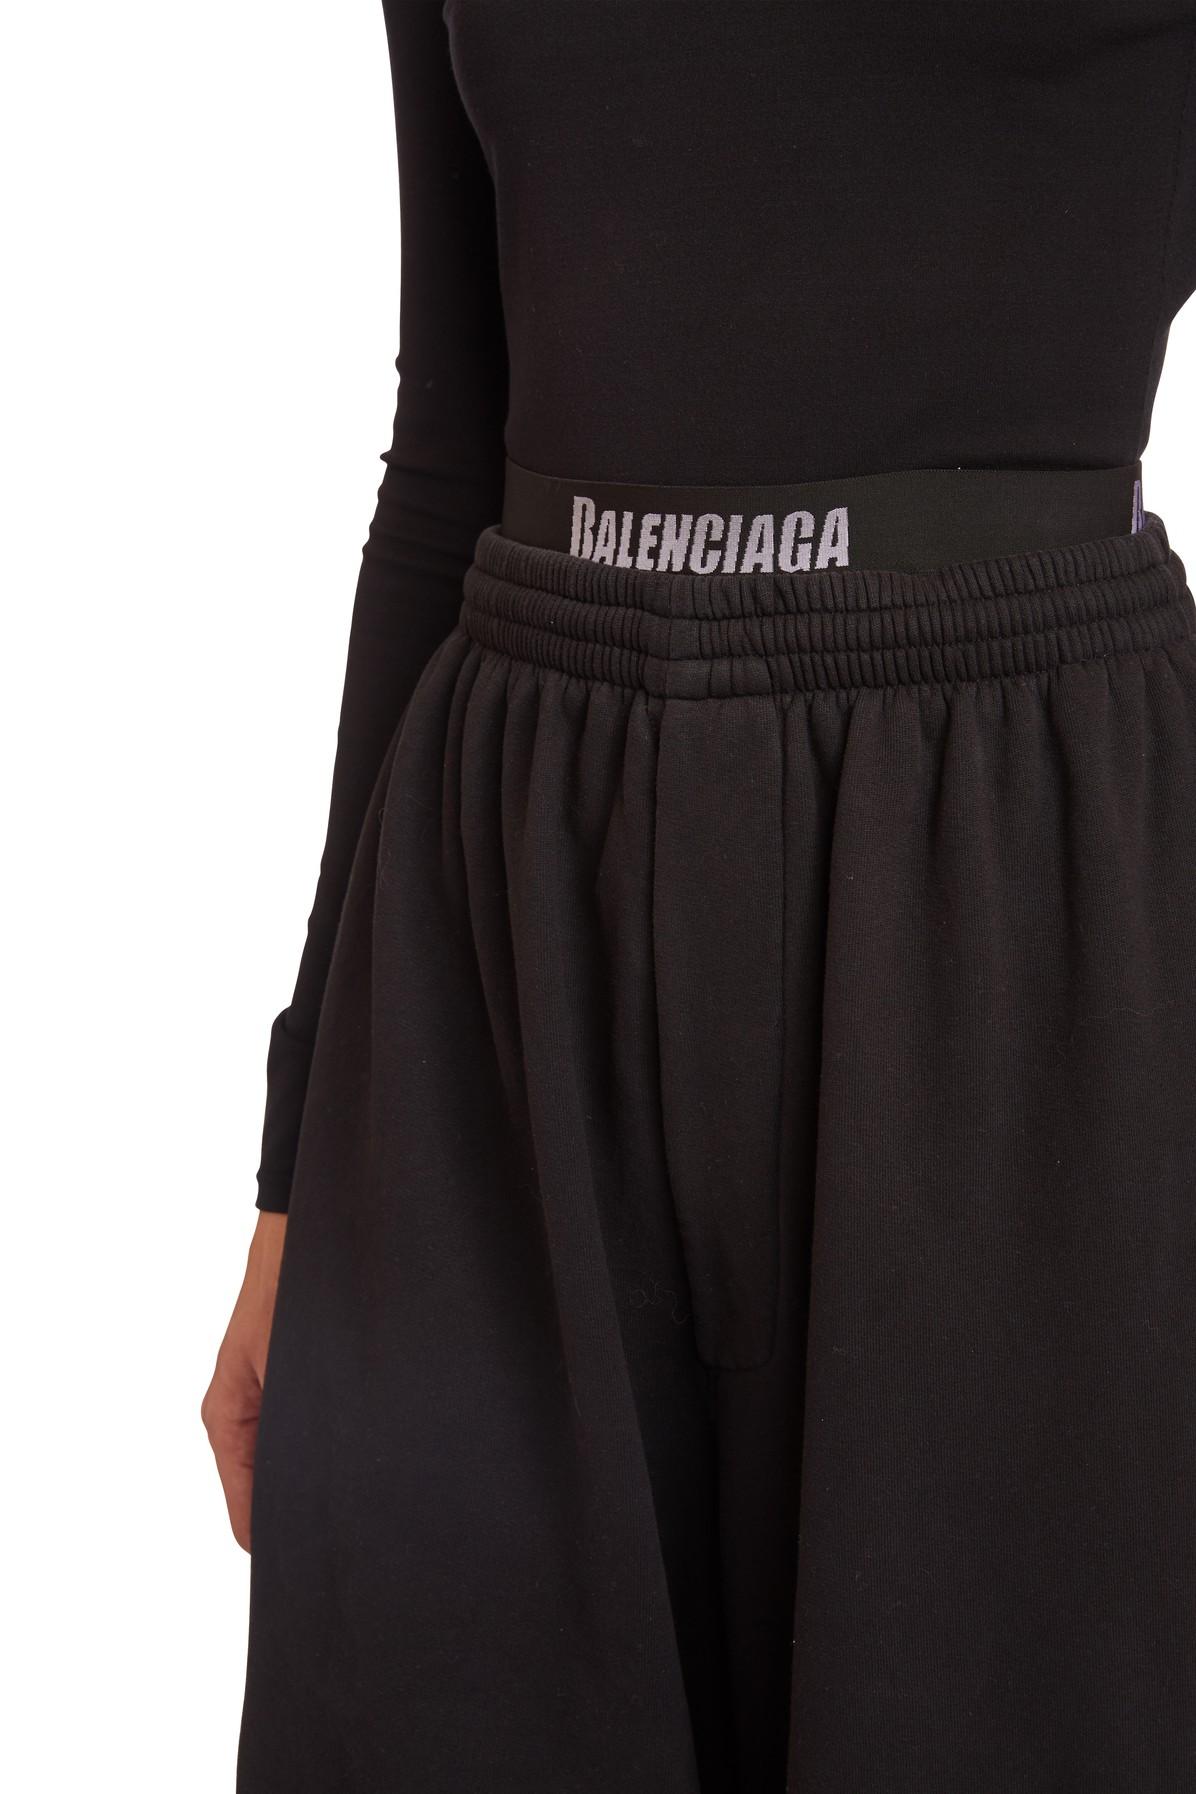 Balenciaga Elastic Sweatpants in Black | Lyst